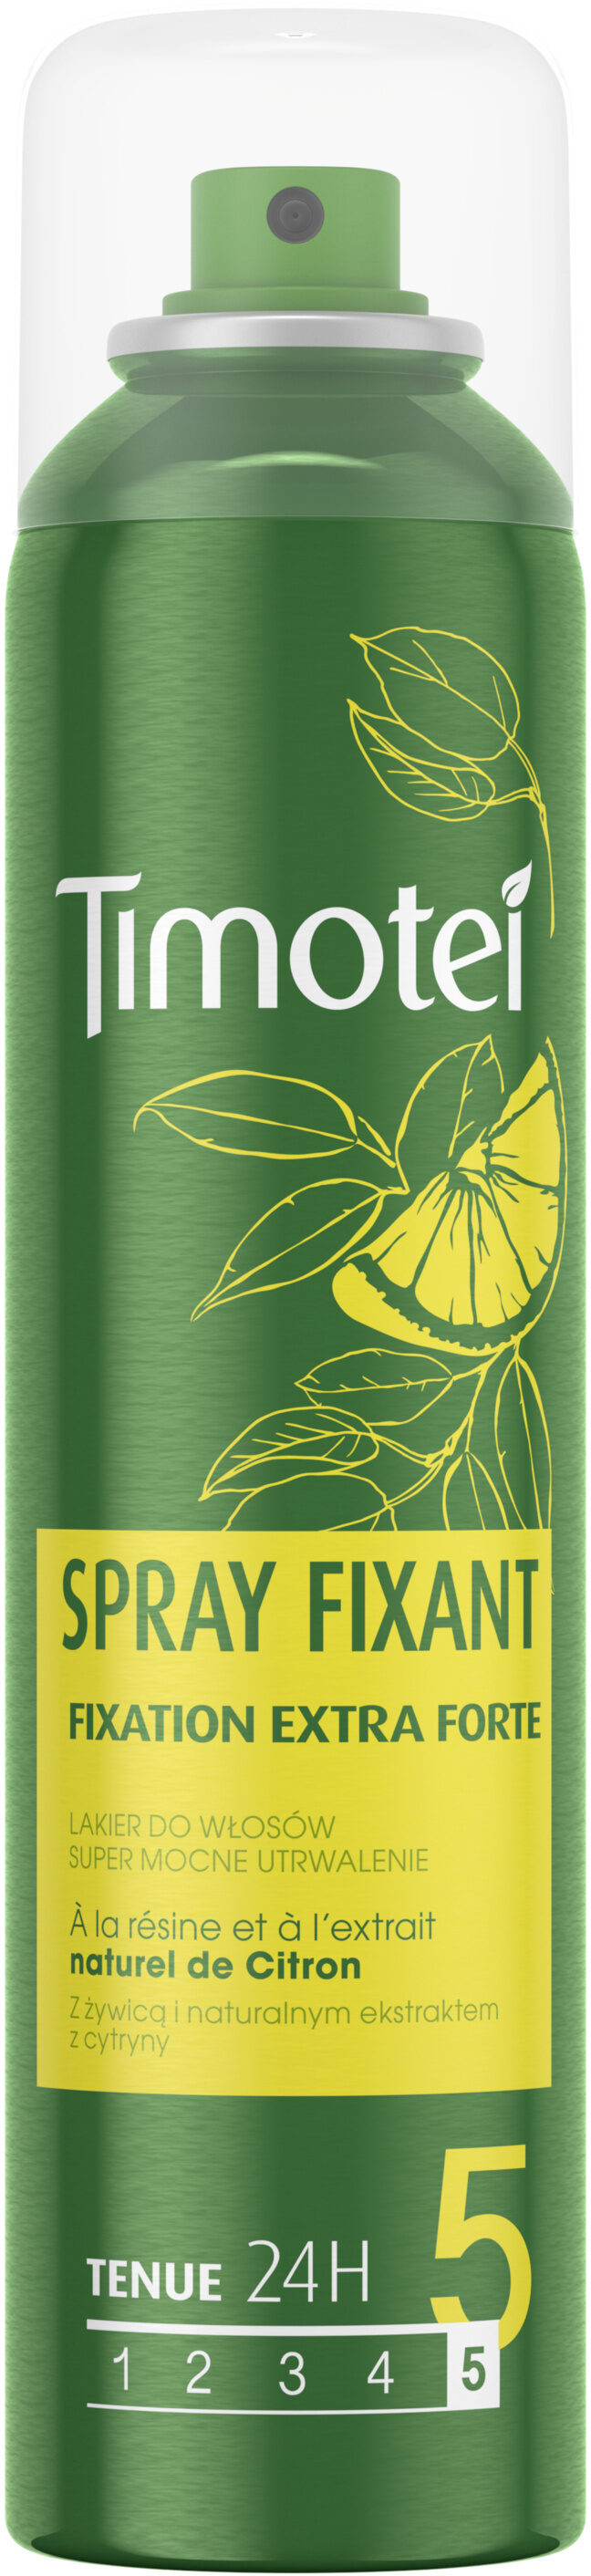 Timotei Spray Fixant A l'Extrait Naturel de Citron Fixation Extra Forte 250ml - Produit - fr